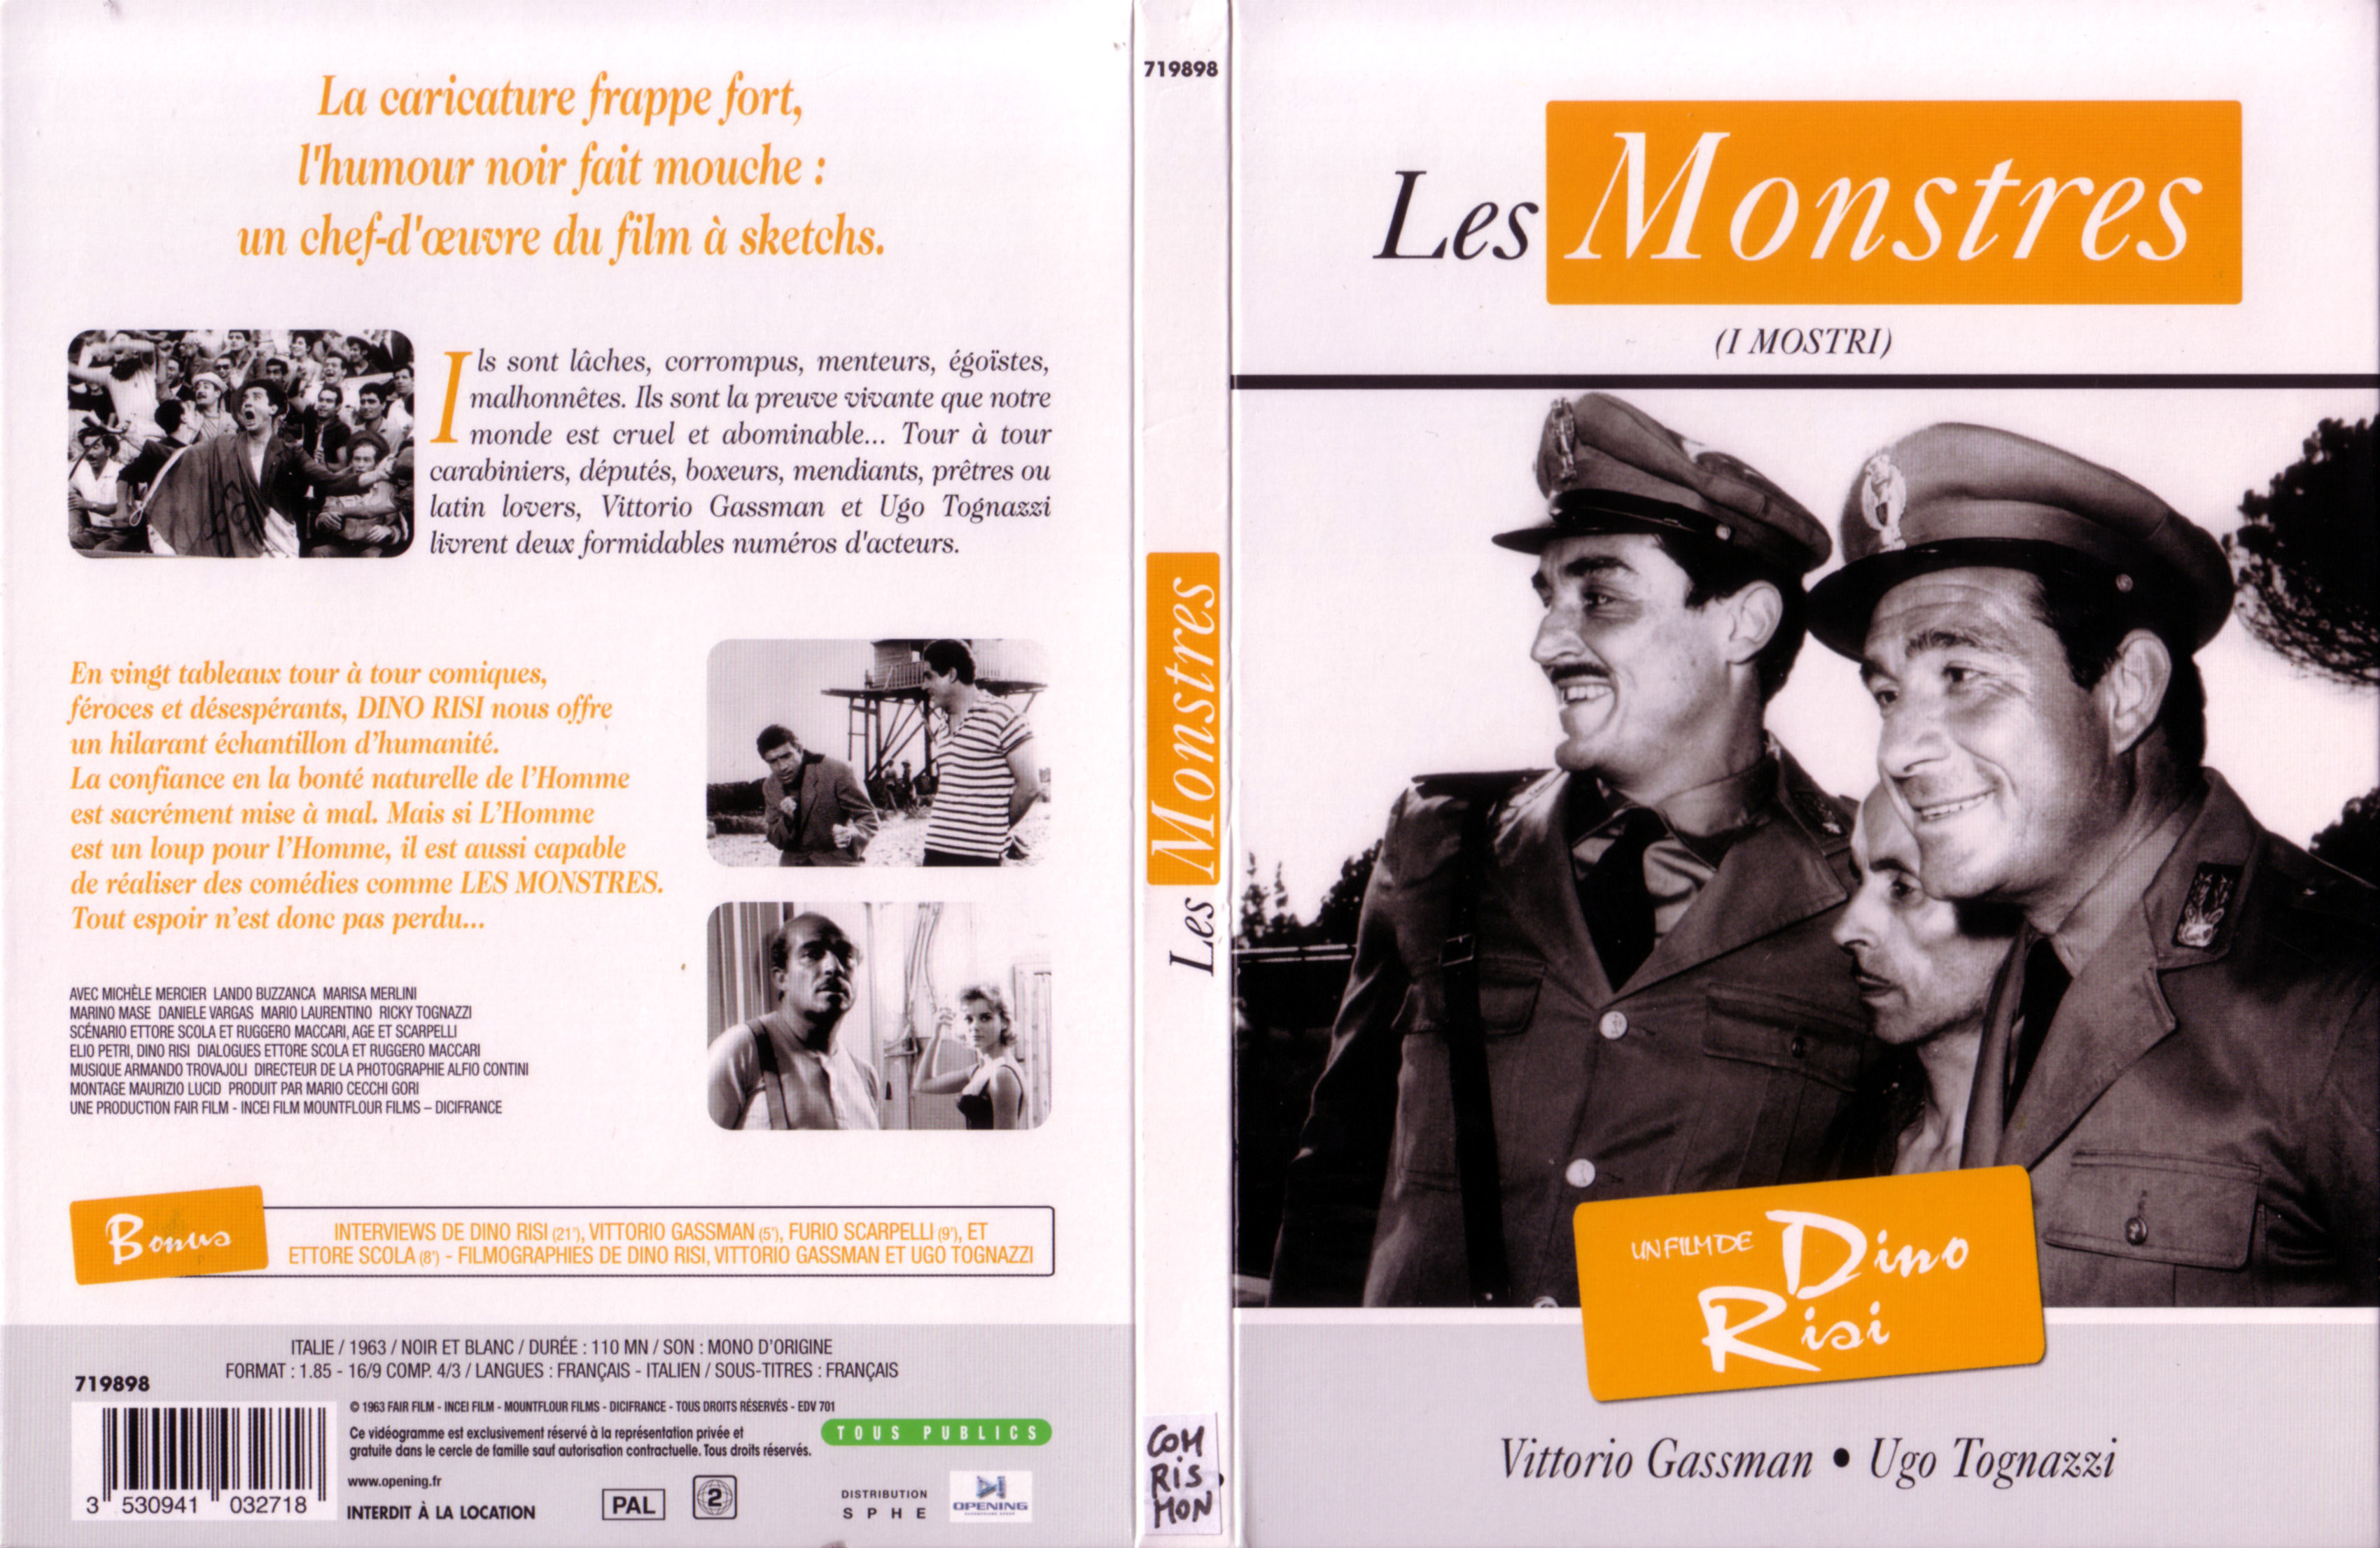 Jaquette DVD Les monstres v2